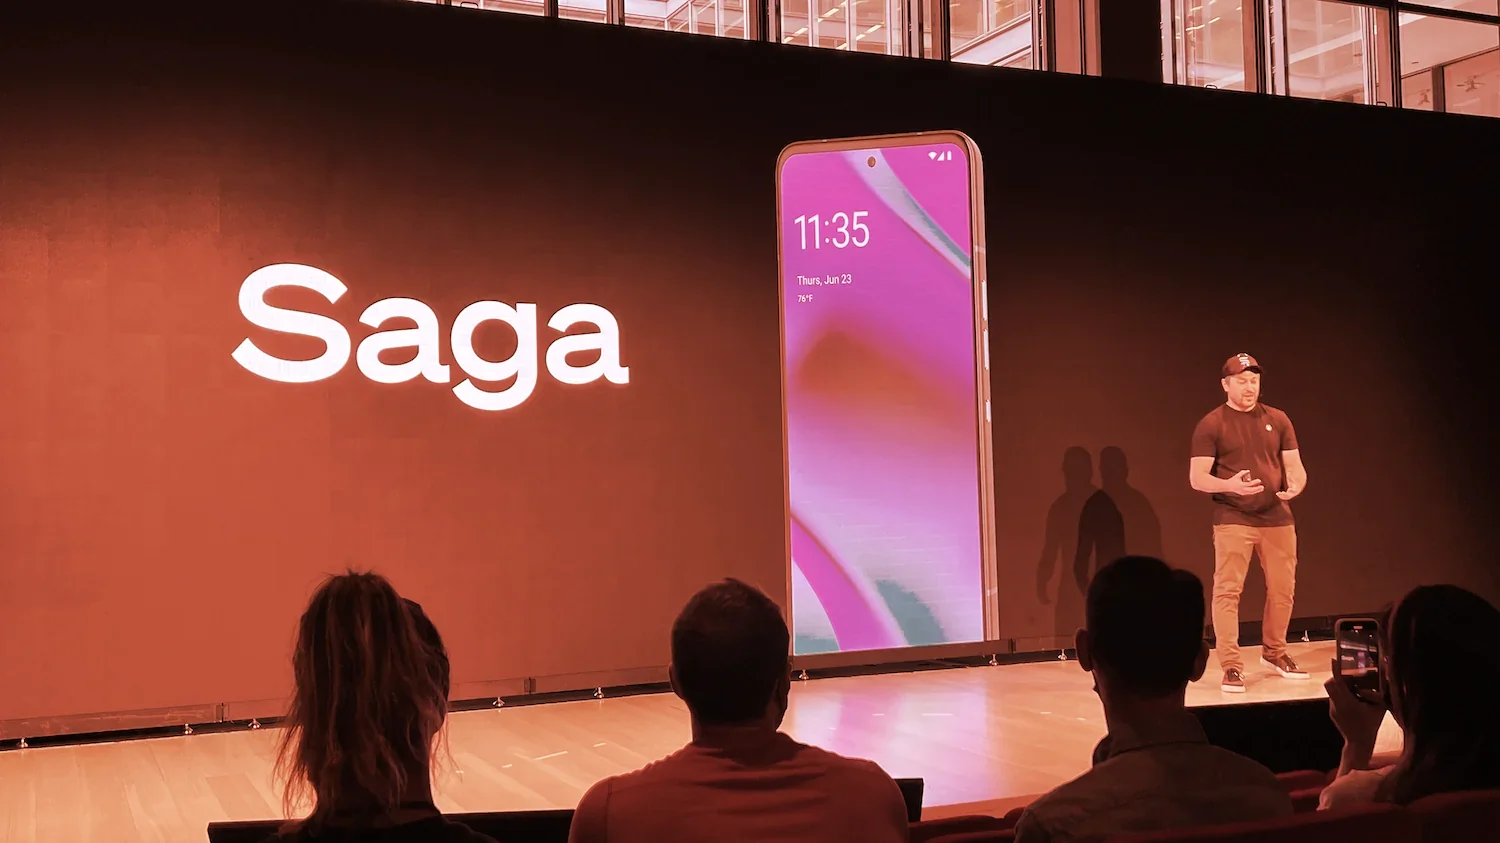 Solana co-founder Anatoly Yakovenko introduces the Saga smartphone in New York City. Image: Decrypt